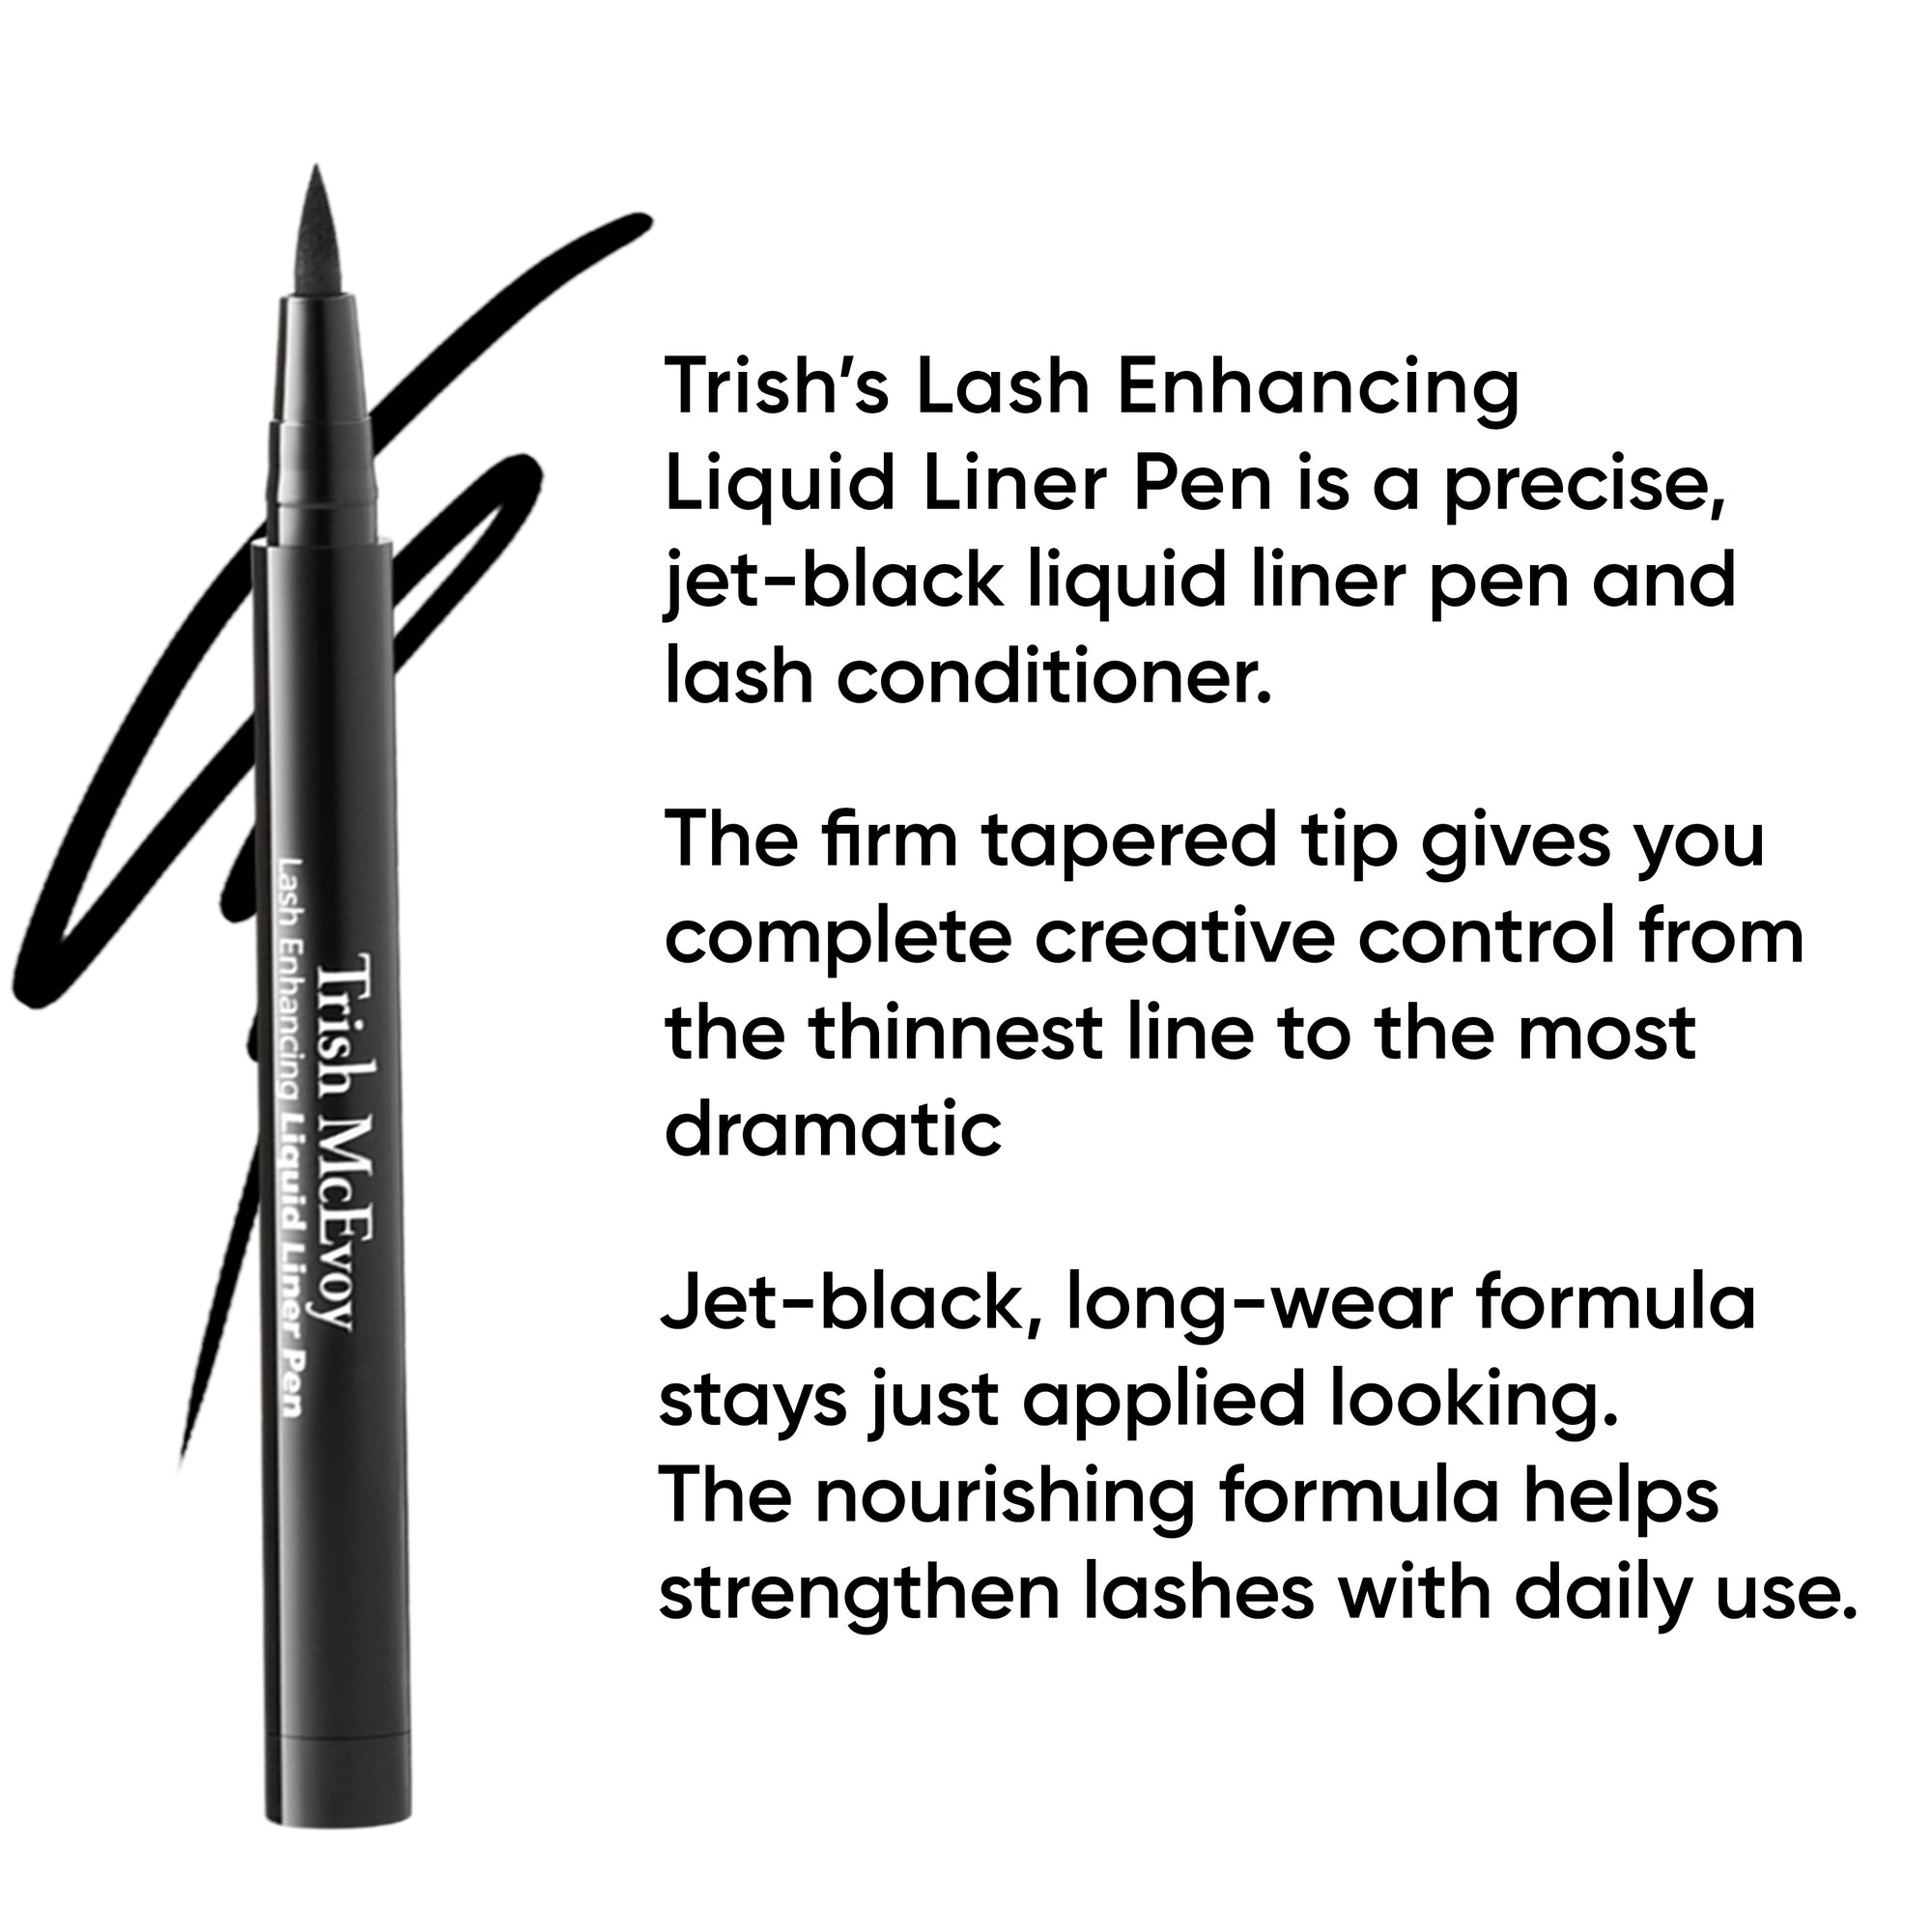 Lash Enhancing Liquid Liner Pen by Trish McEvoy